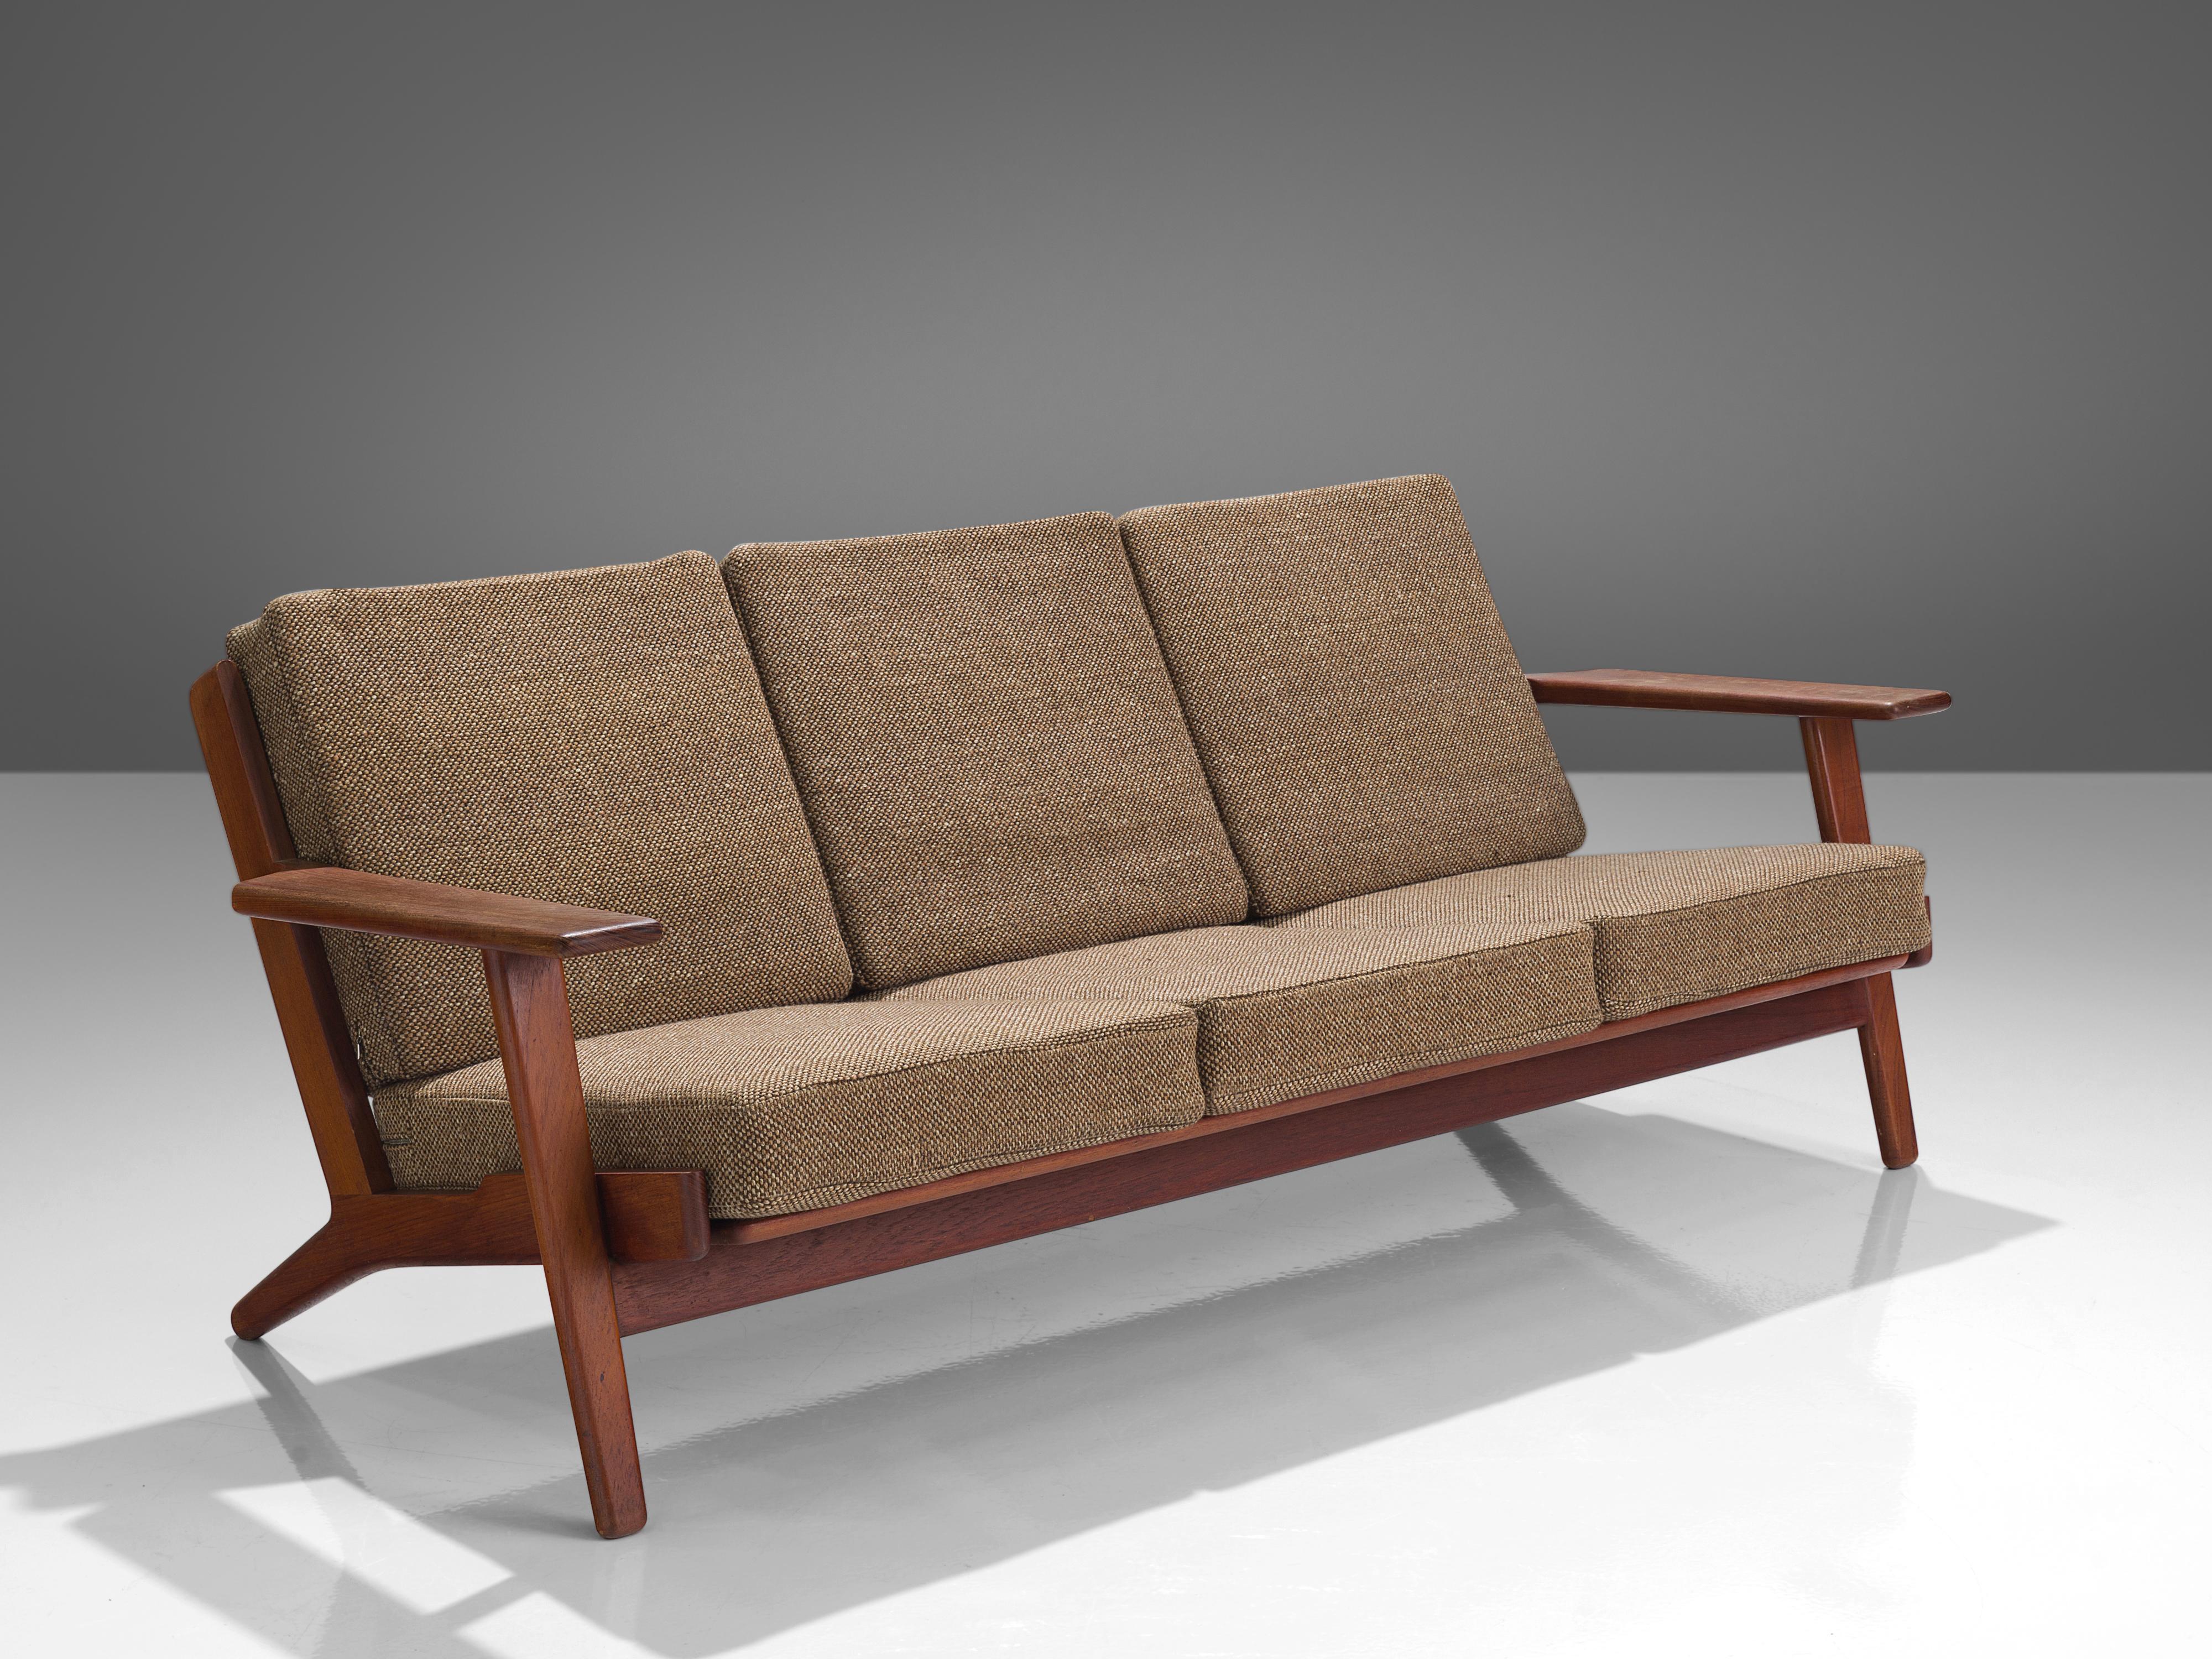 Mid-20th Century Hans J. Wegner for Getama Sofa 'Plank' in Teak and Brown Upholstery 